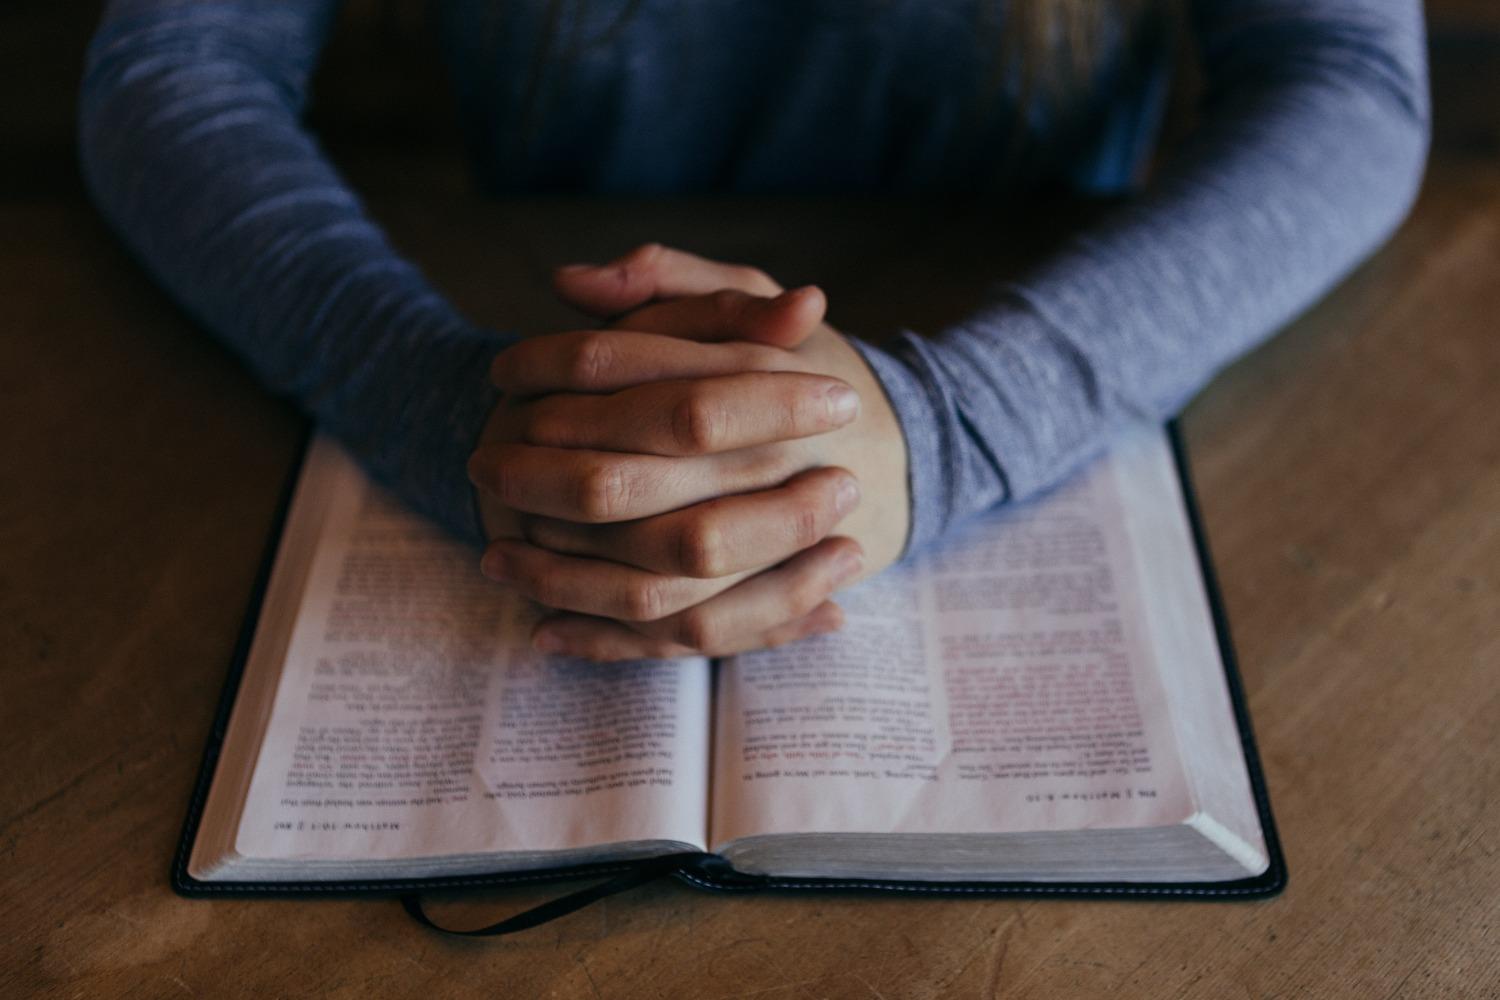 Hands at prayer on a Bible